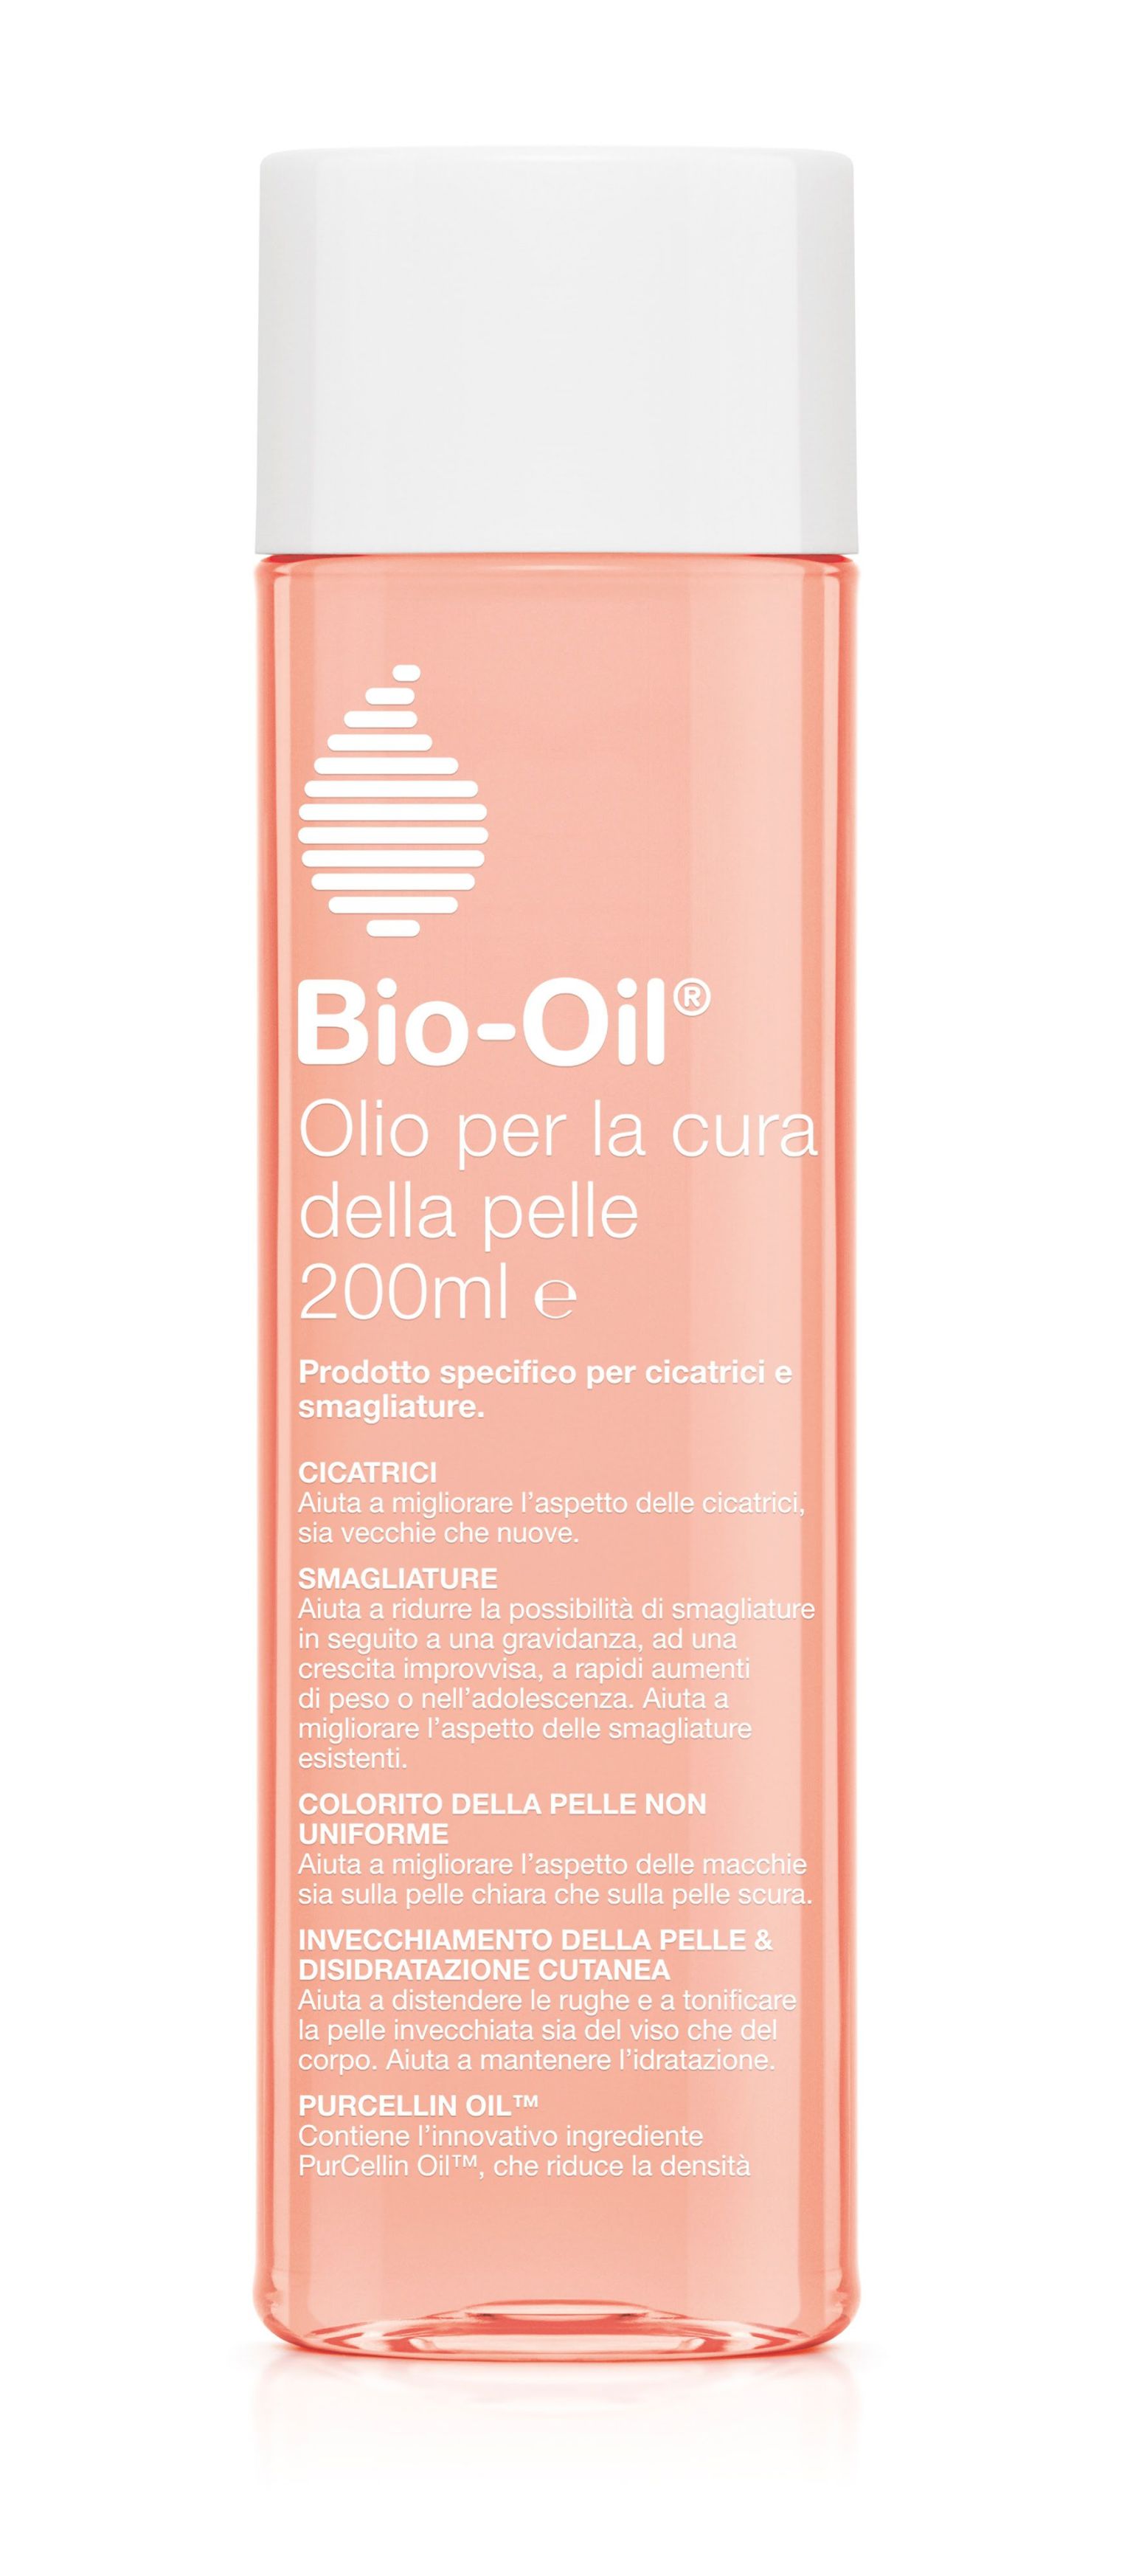 926235603 - Bio-Oil Olio Dermatologico 200ml - 7859994_3.jpg